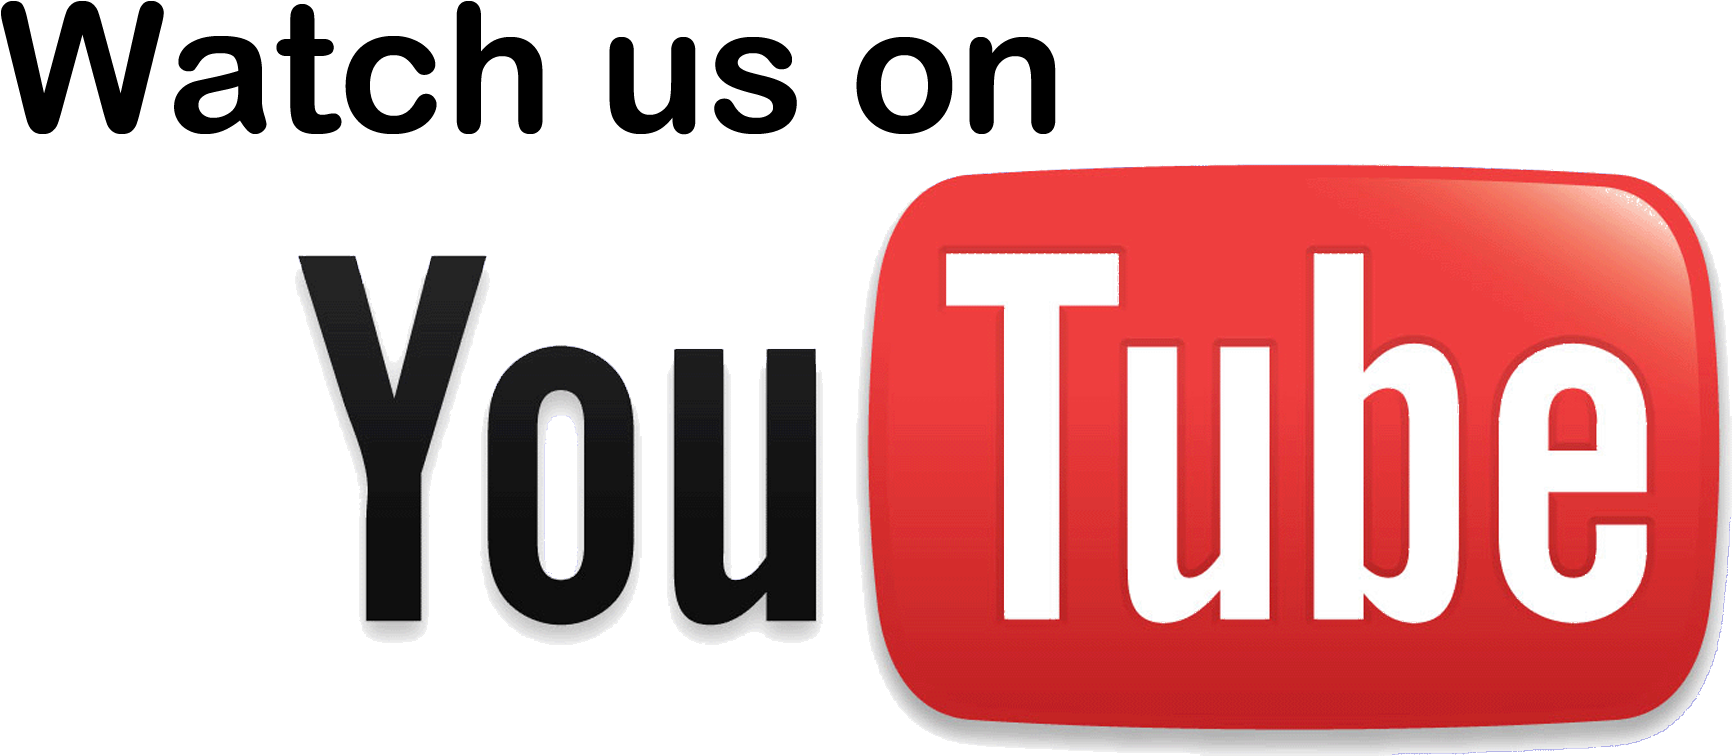 Find Us On Youtube Logo (1788x804)